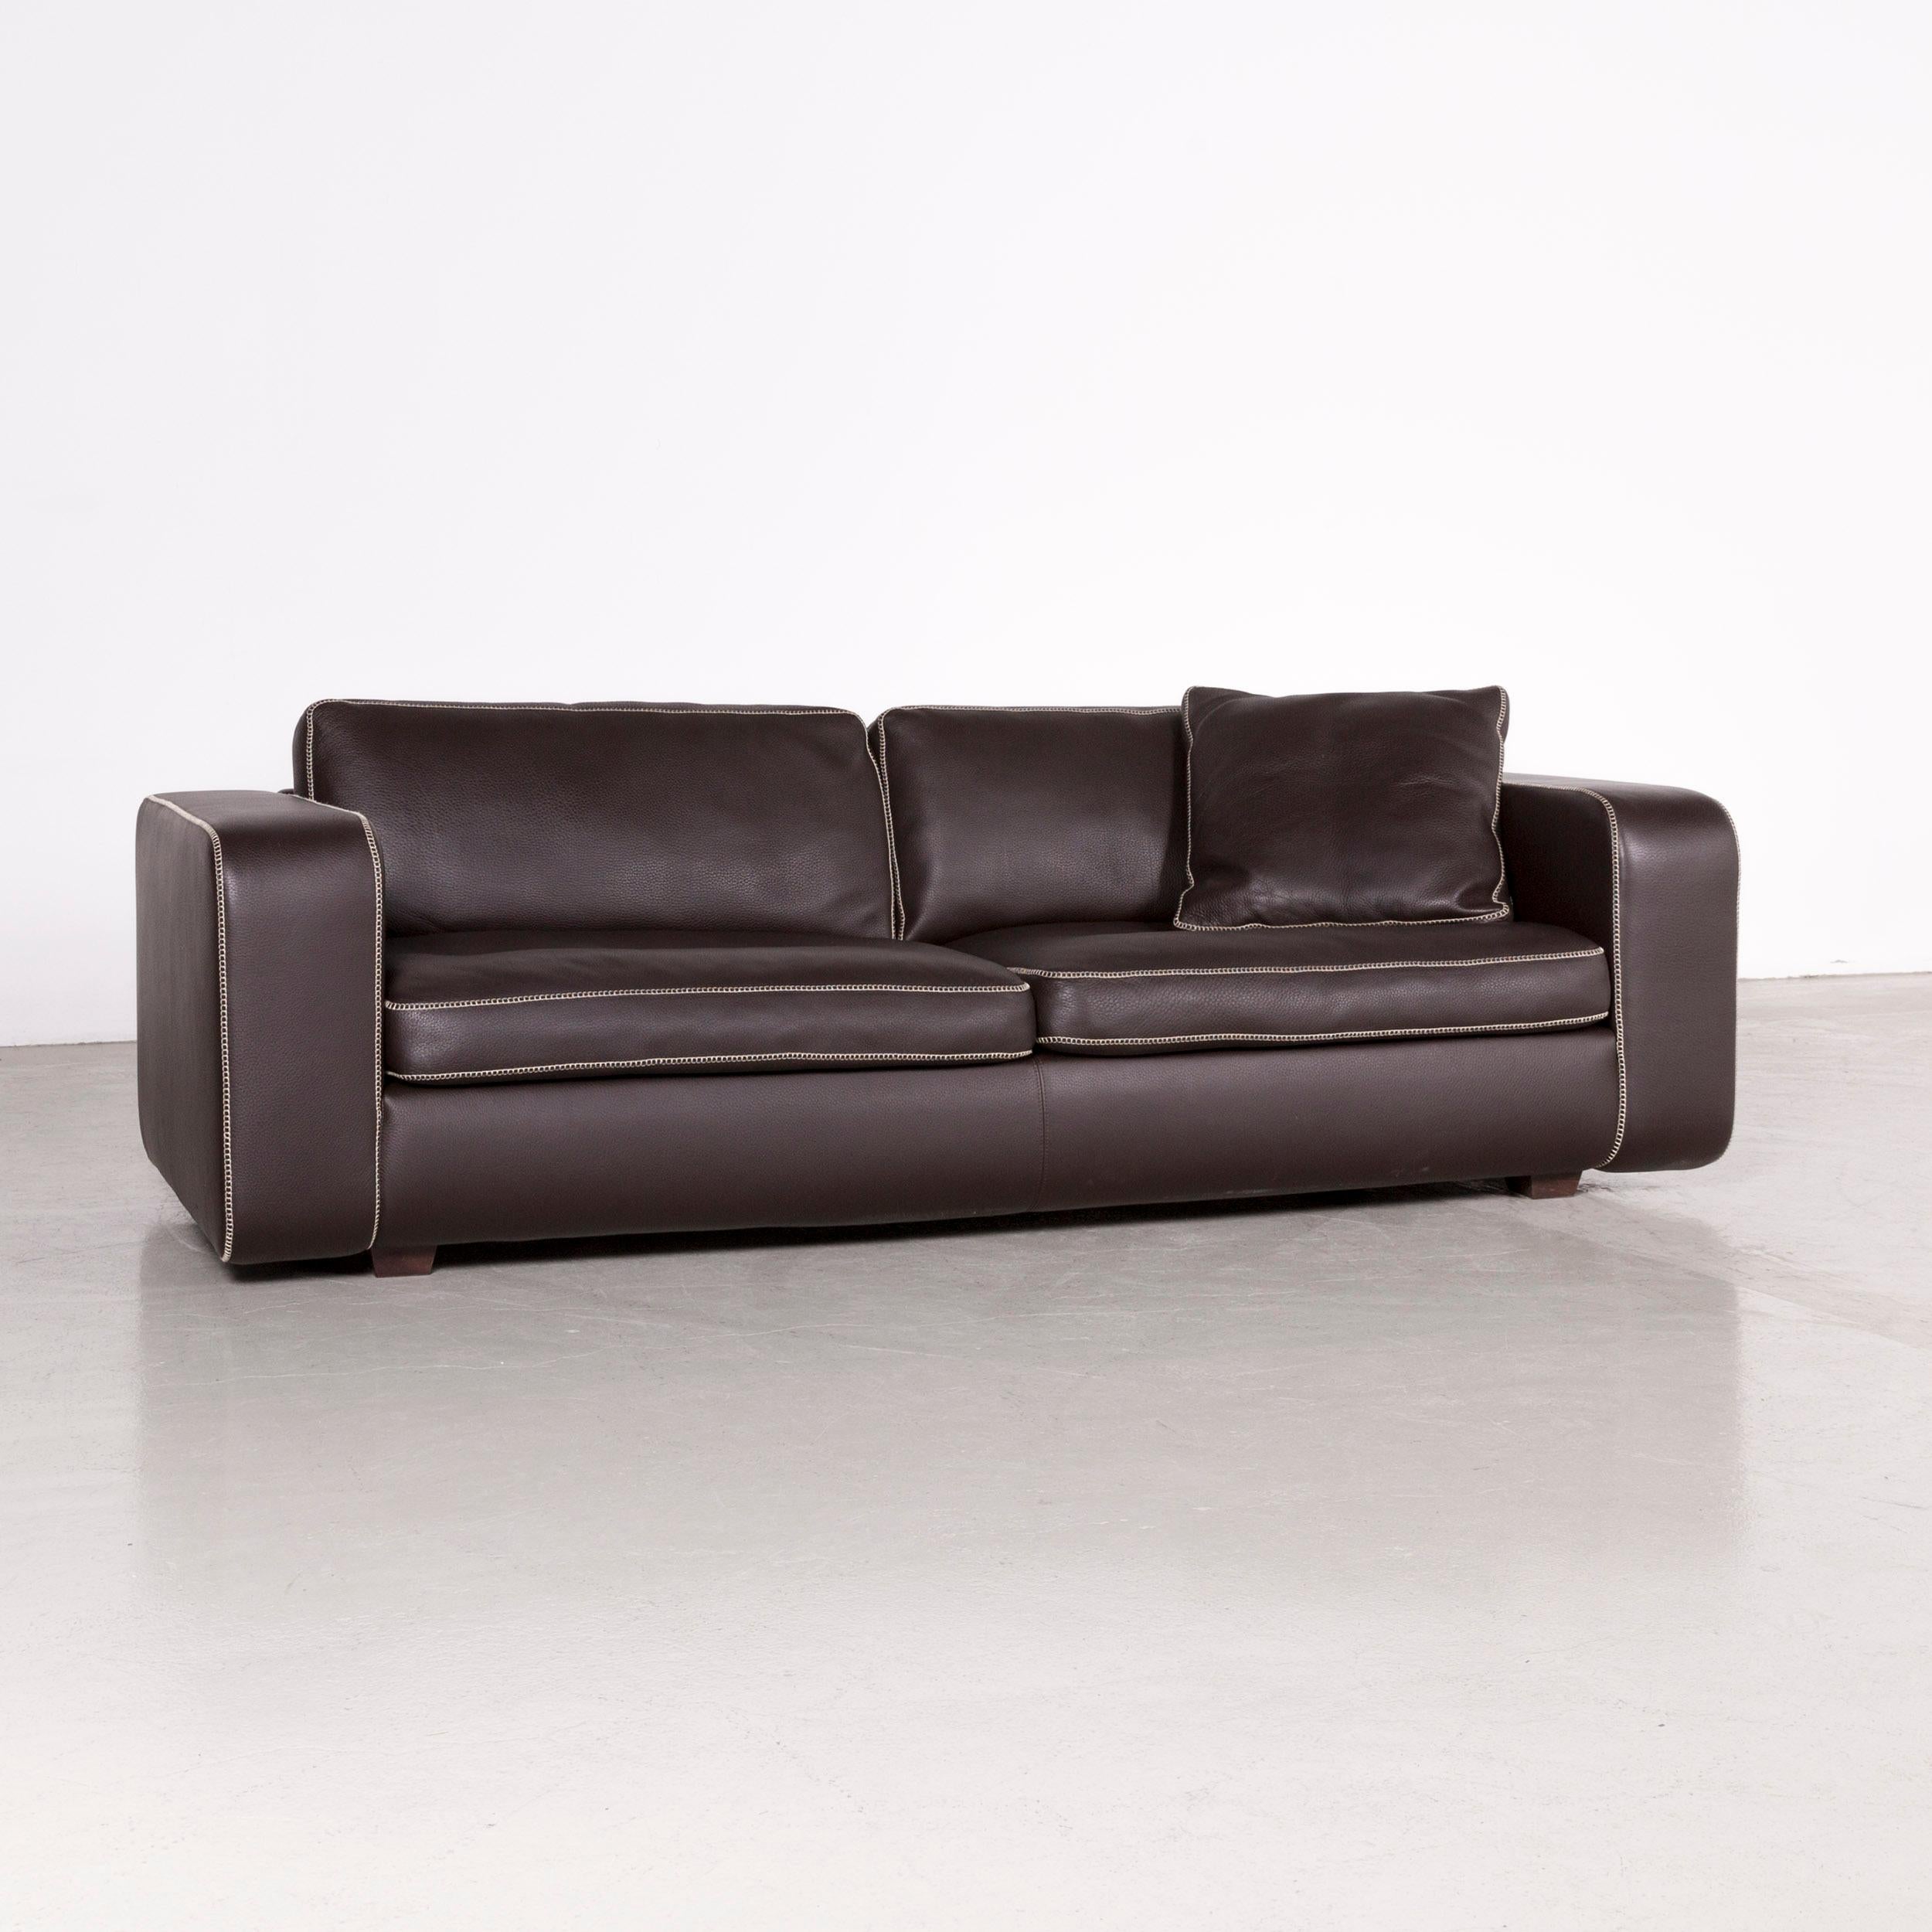 German Machalke Valentino Designer Leather Sofa Brown Three-Seat Couch For Sale